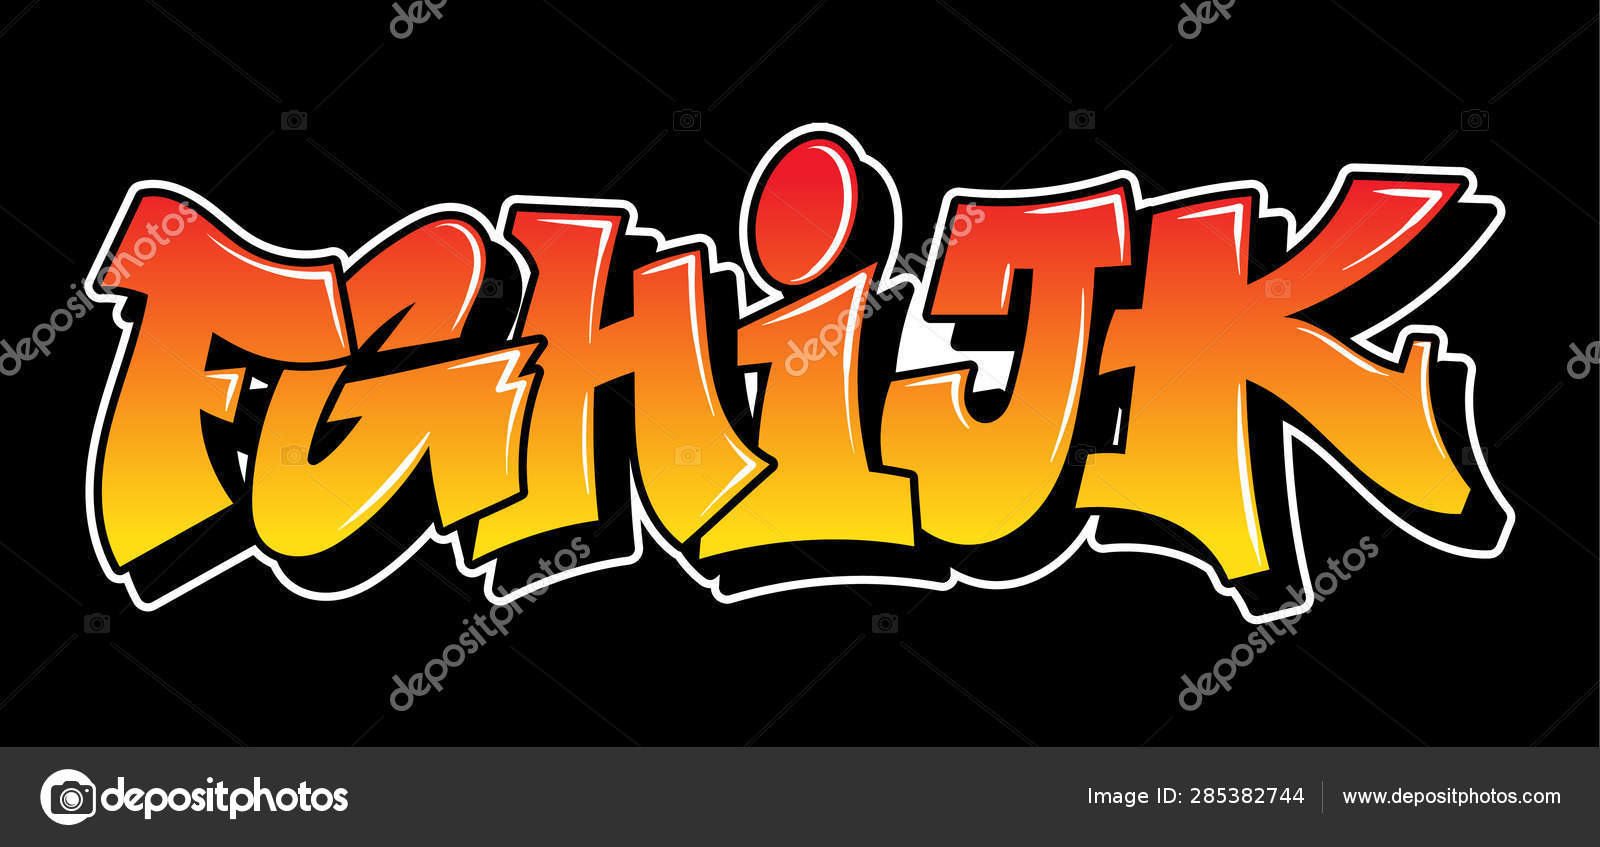 Graffiti Style Lettering Text Design Stock Vector Image By C Dovbush94